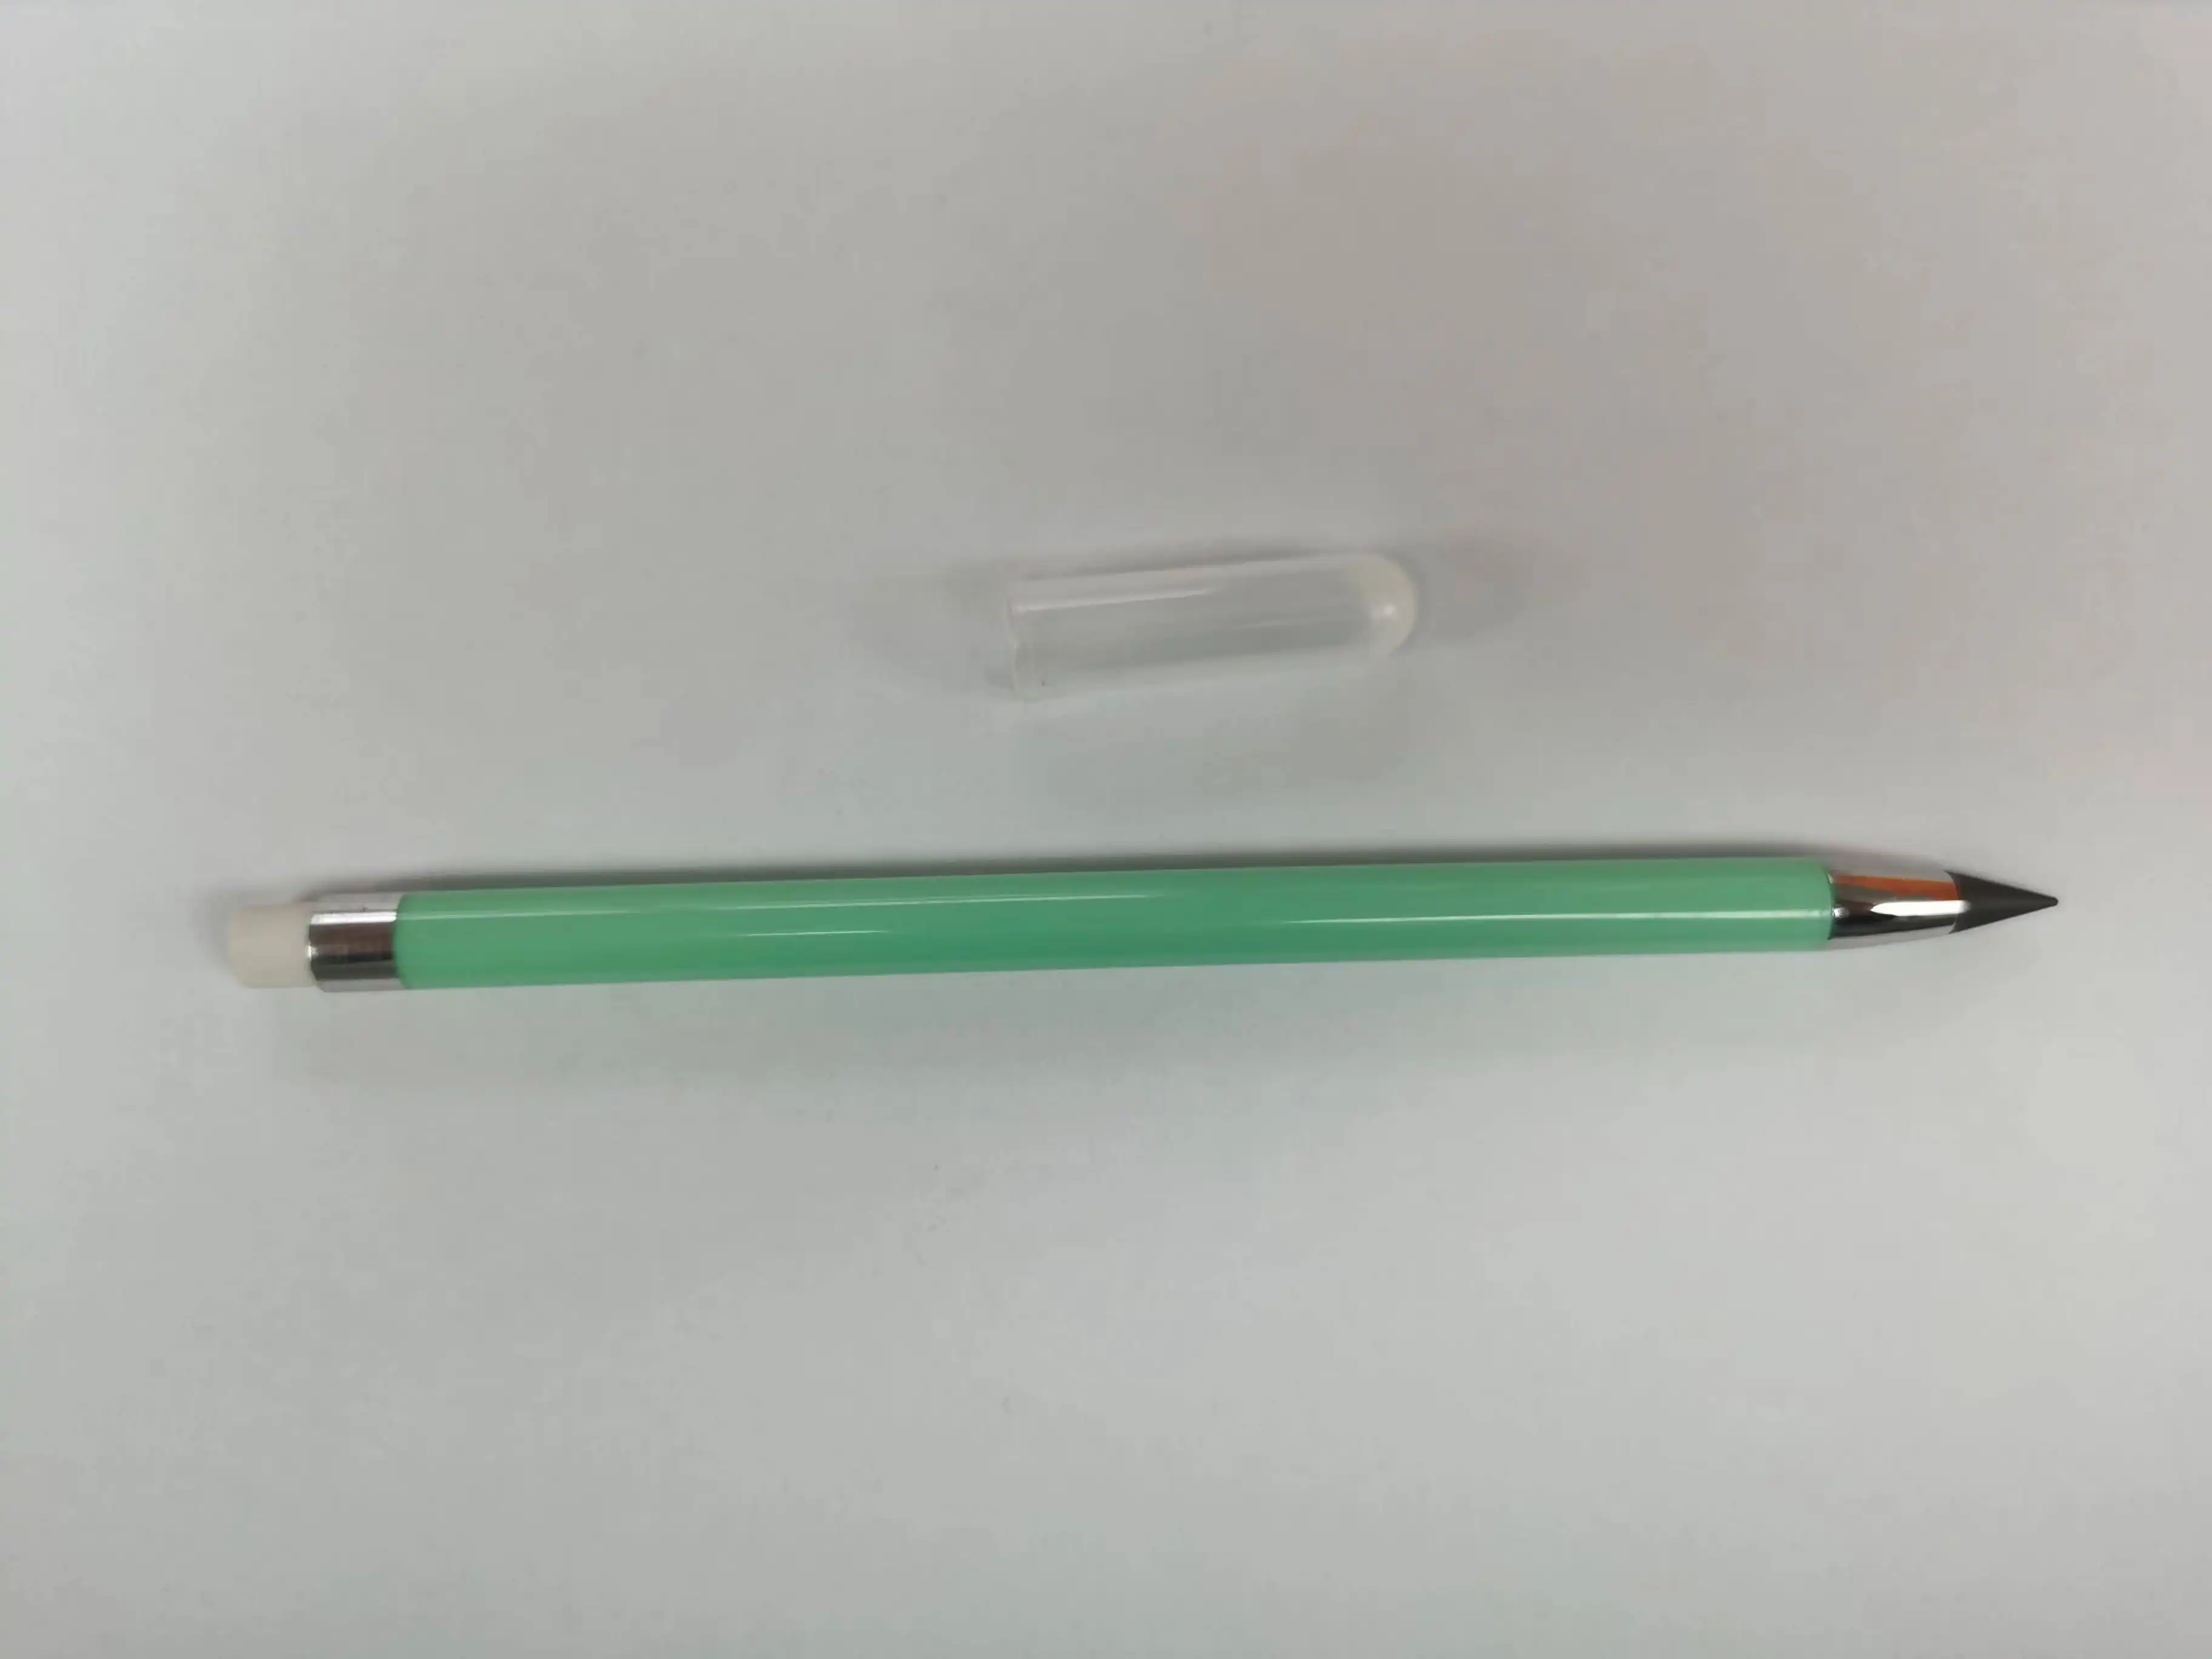 Metal Inkless Pen Aluminium Everlasting Pencil Metallic Erasable Signing  Pen Eternal Pencil Colorful Writing Pen Drop Shipping